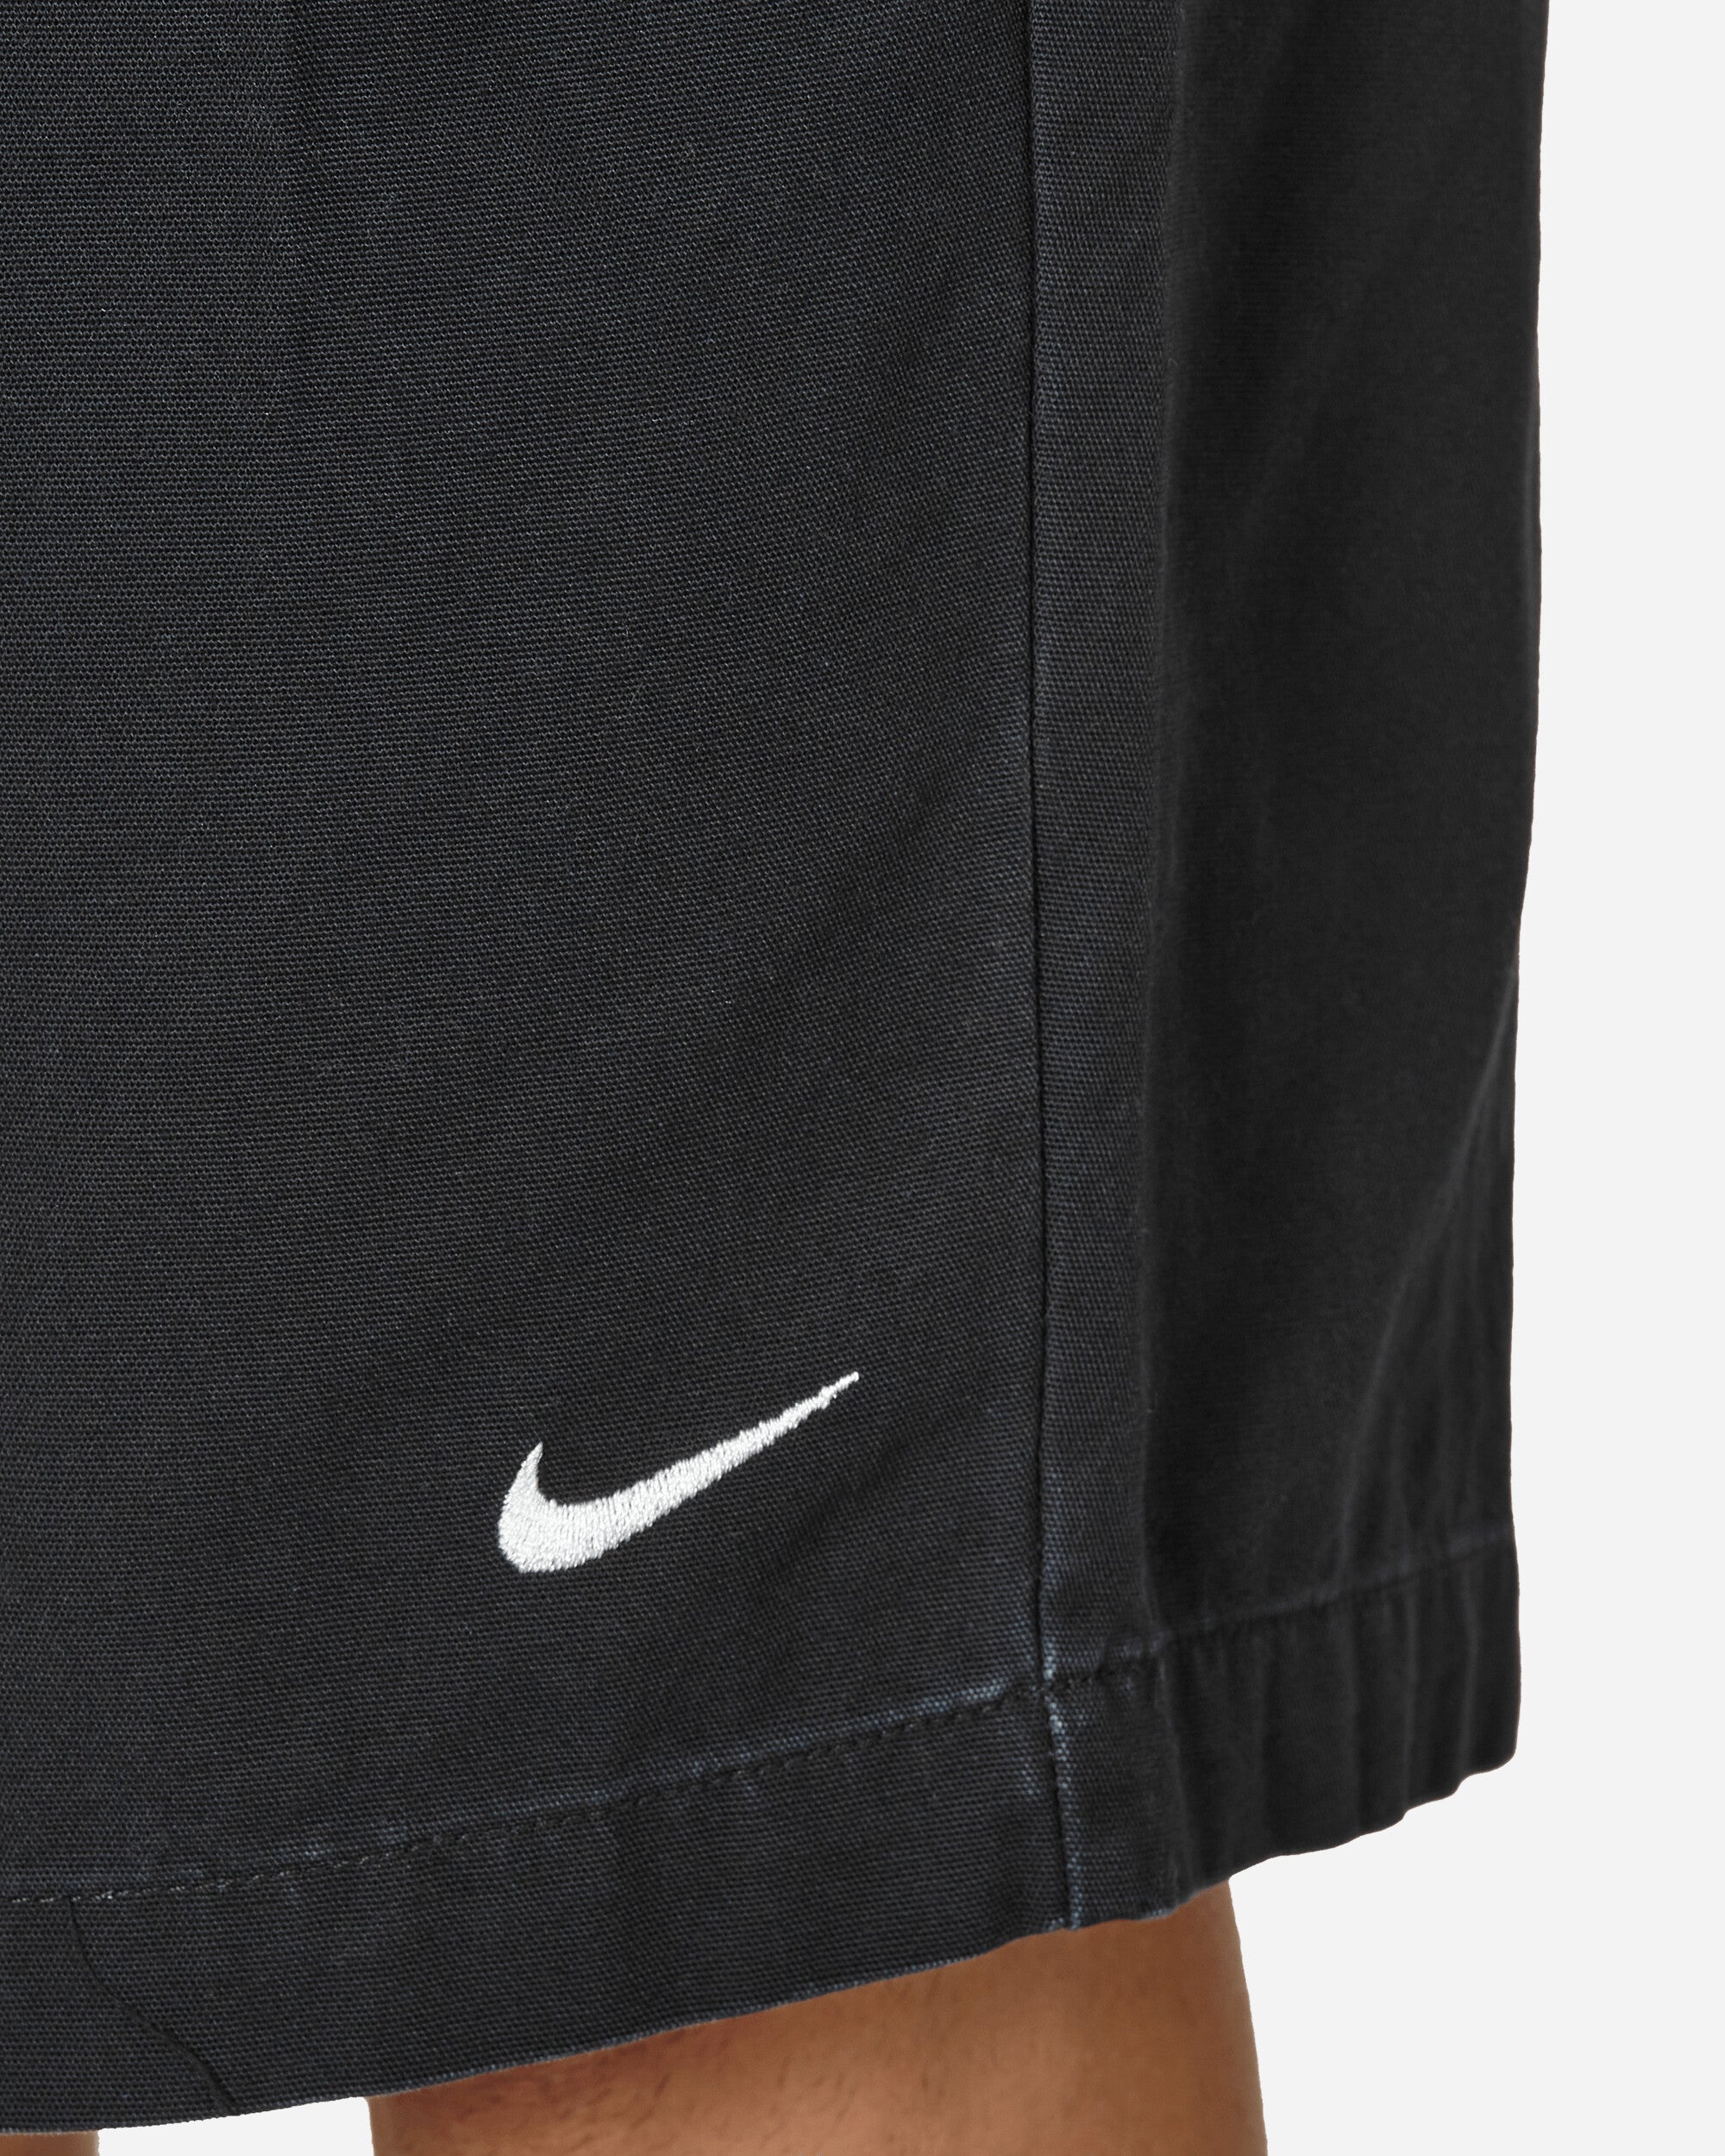 Nike Pleated Chino Short Black/White Shorts Short DX0643-010